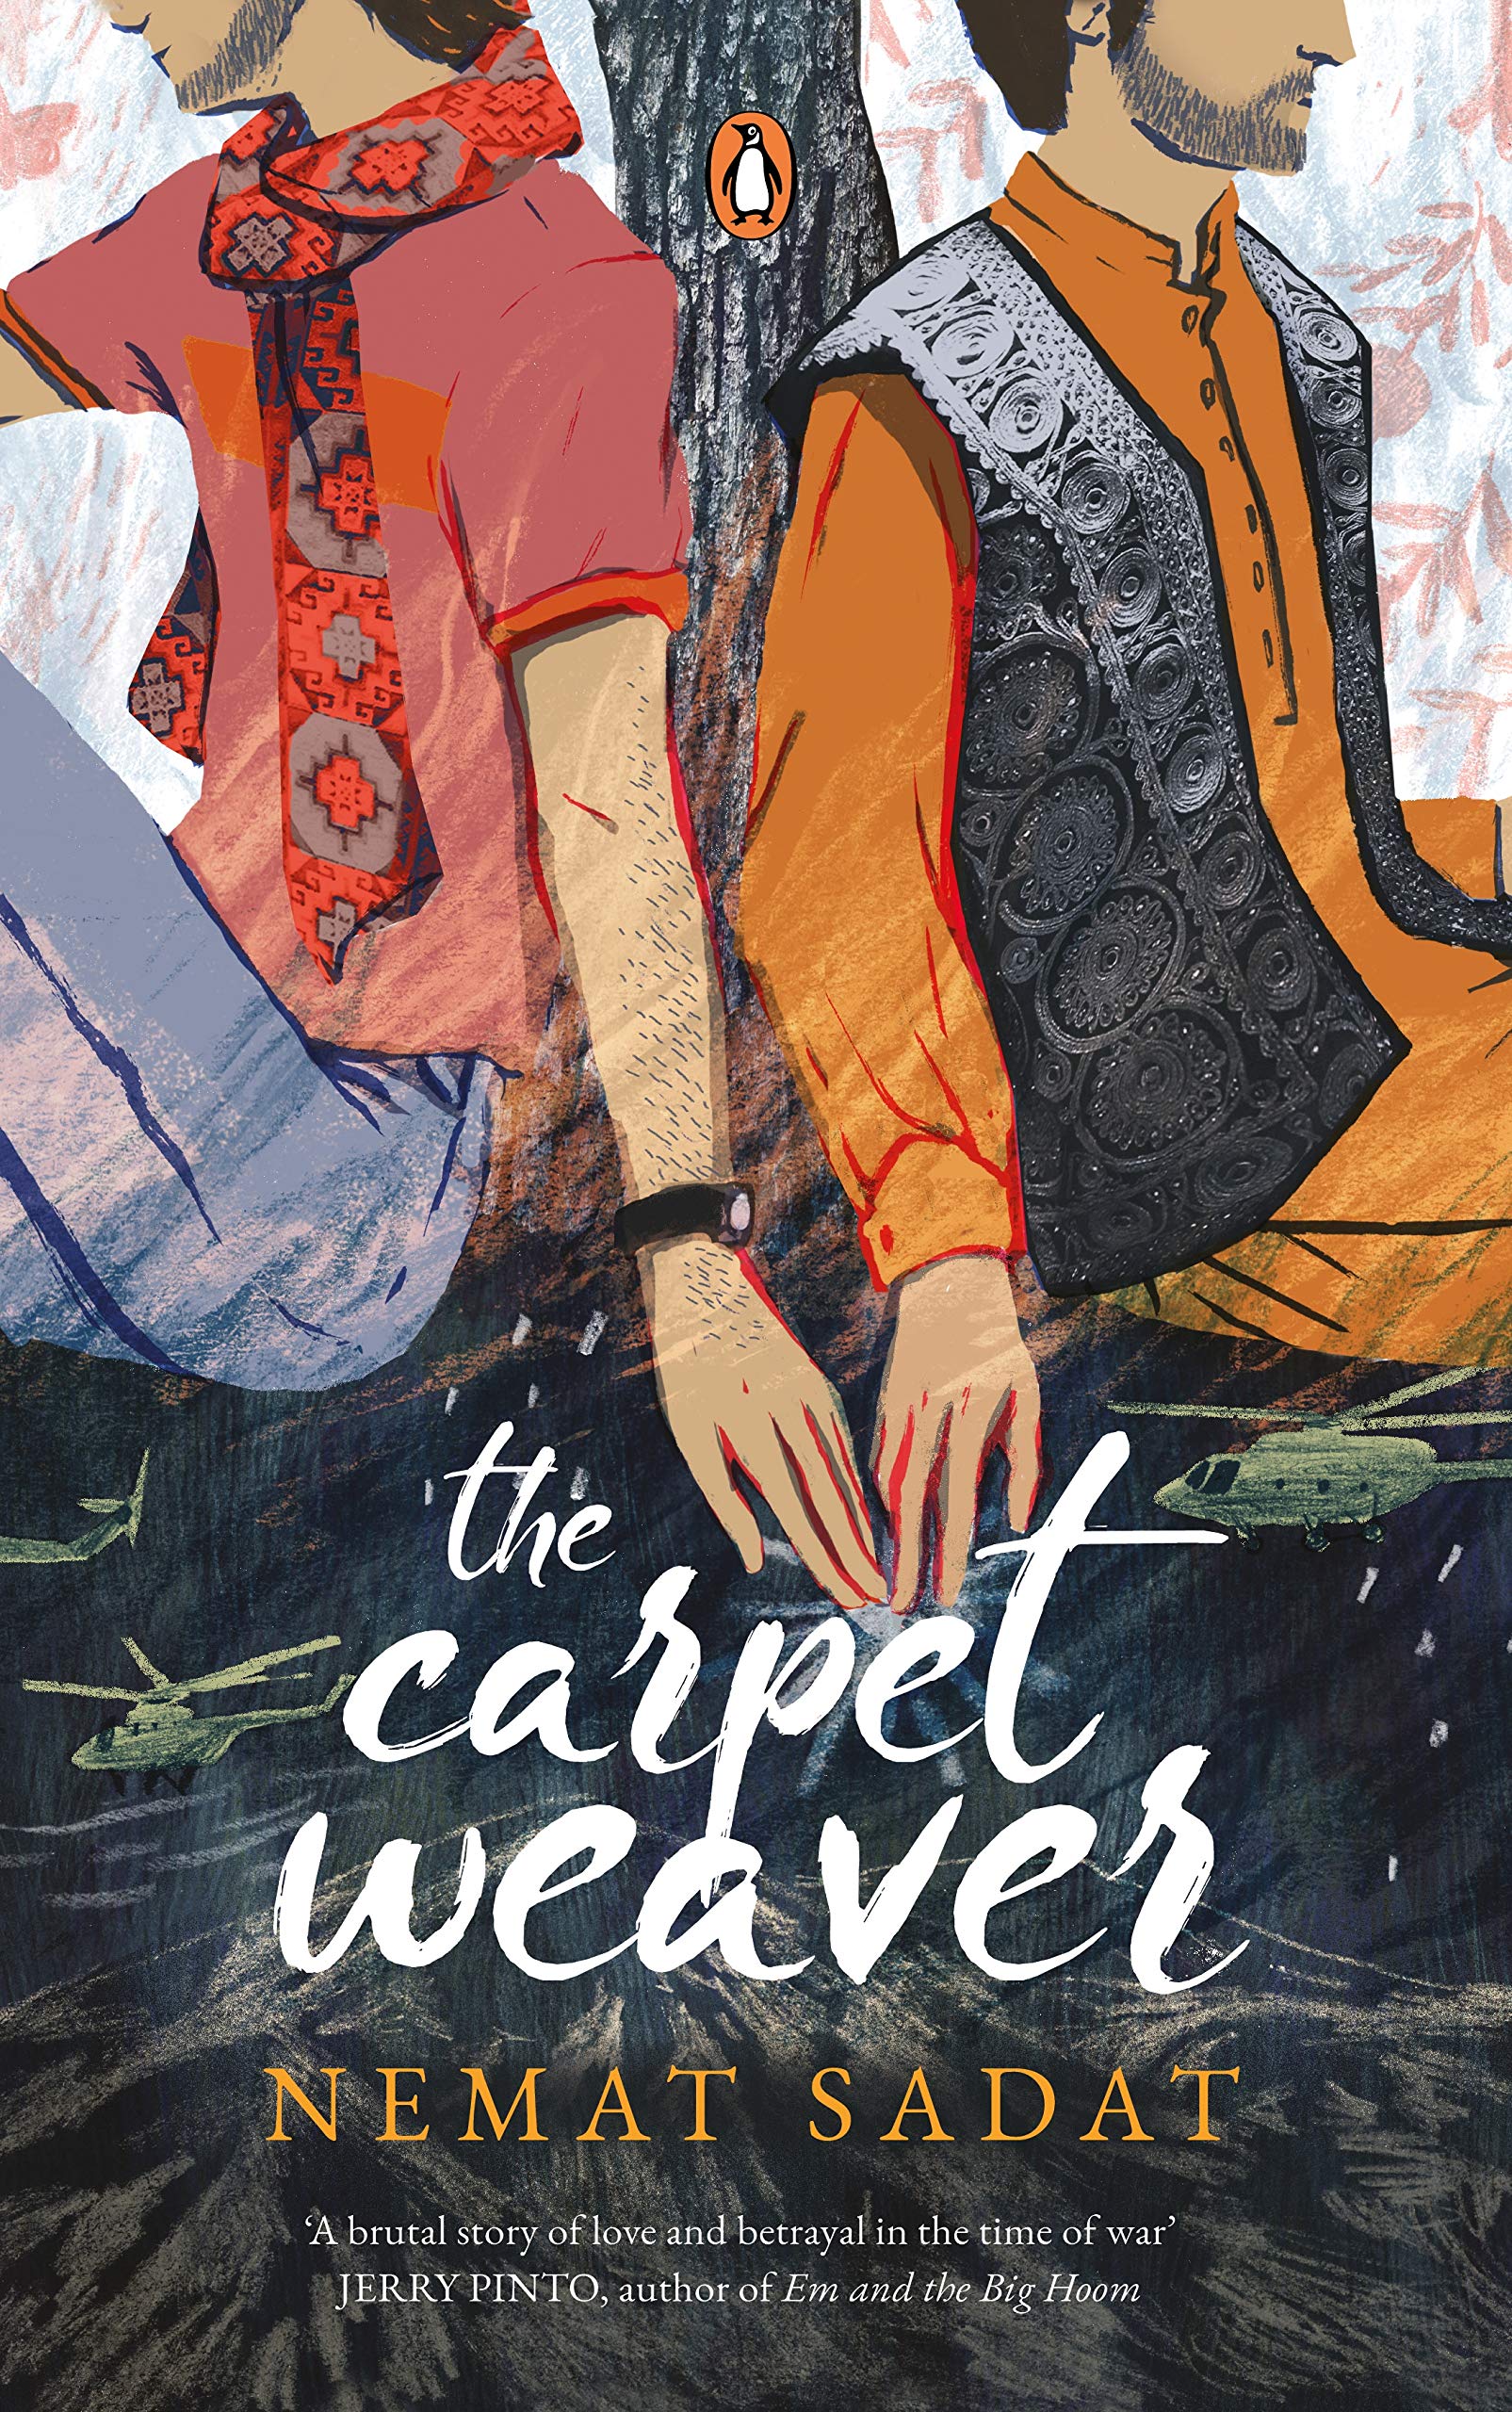 Book Review: “The Carpet Weaver” By Nemat Sadat